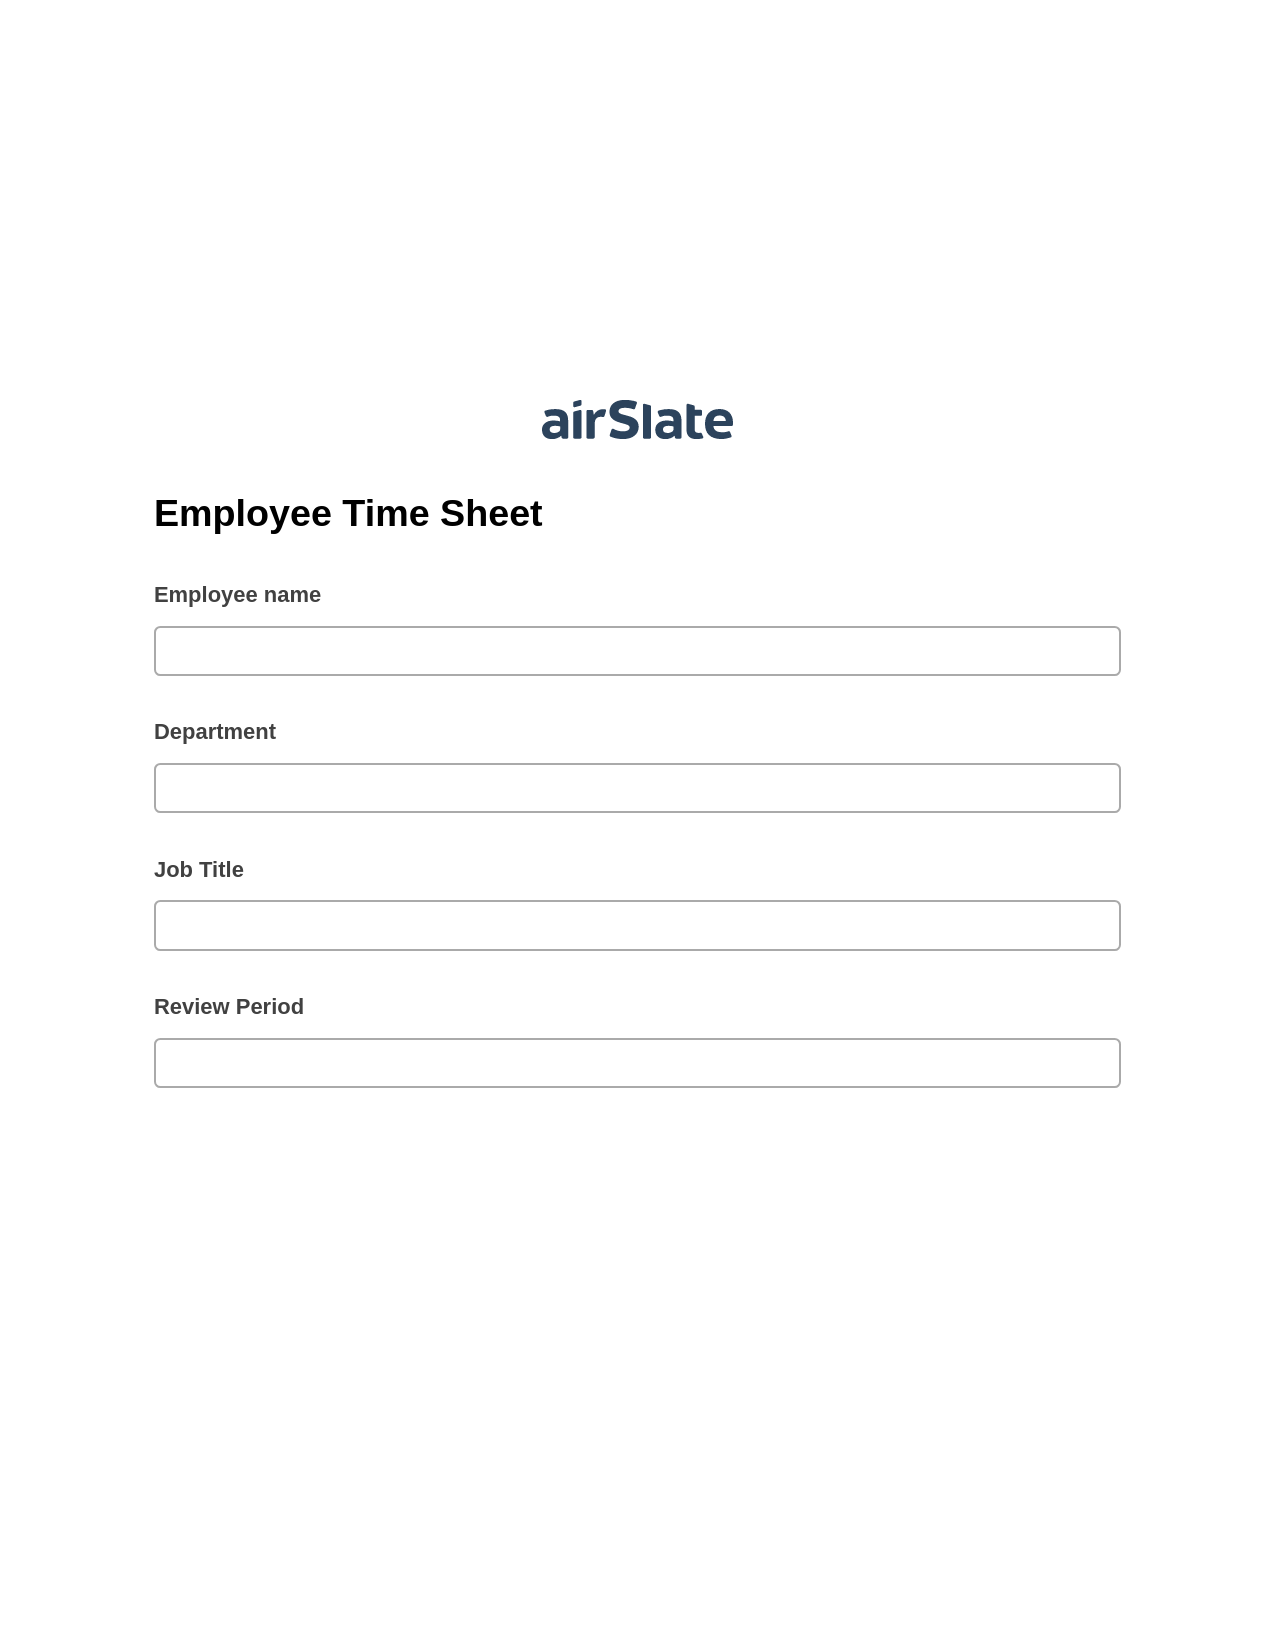 Employee Time Sheet Pre-fill Dropdowns from CSV file Bot, Update Salesforce Records Bot, Slack Two-Way Binding Bot